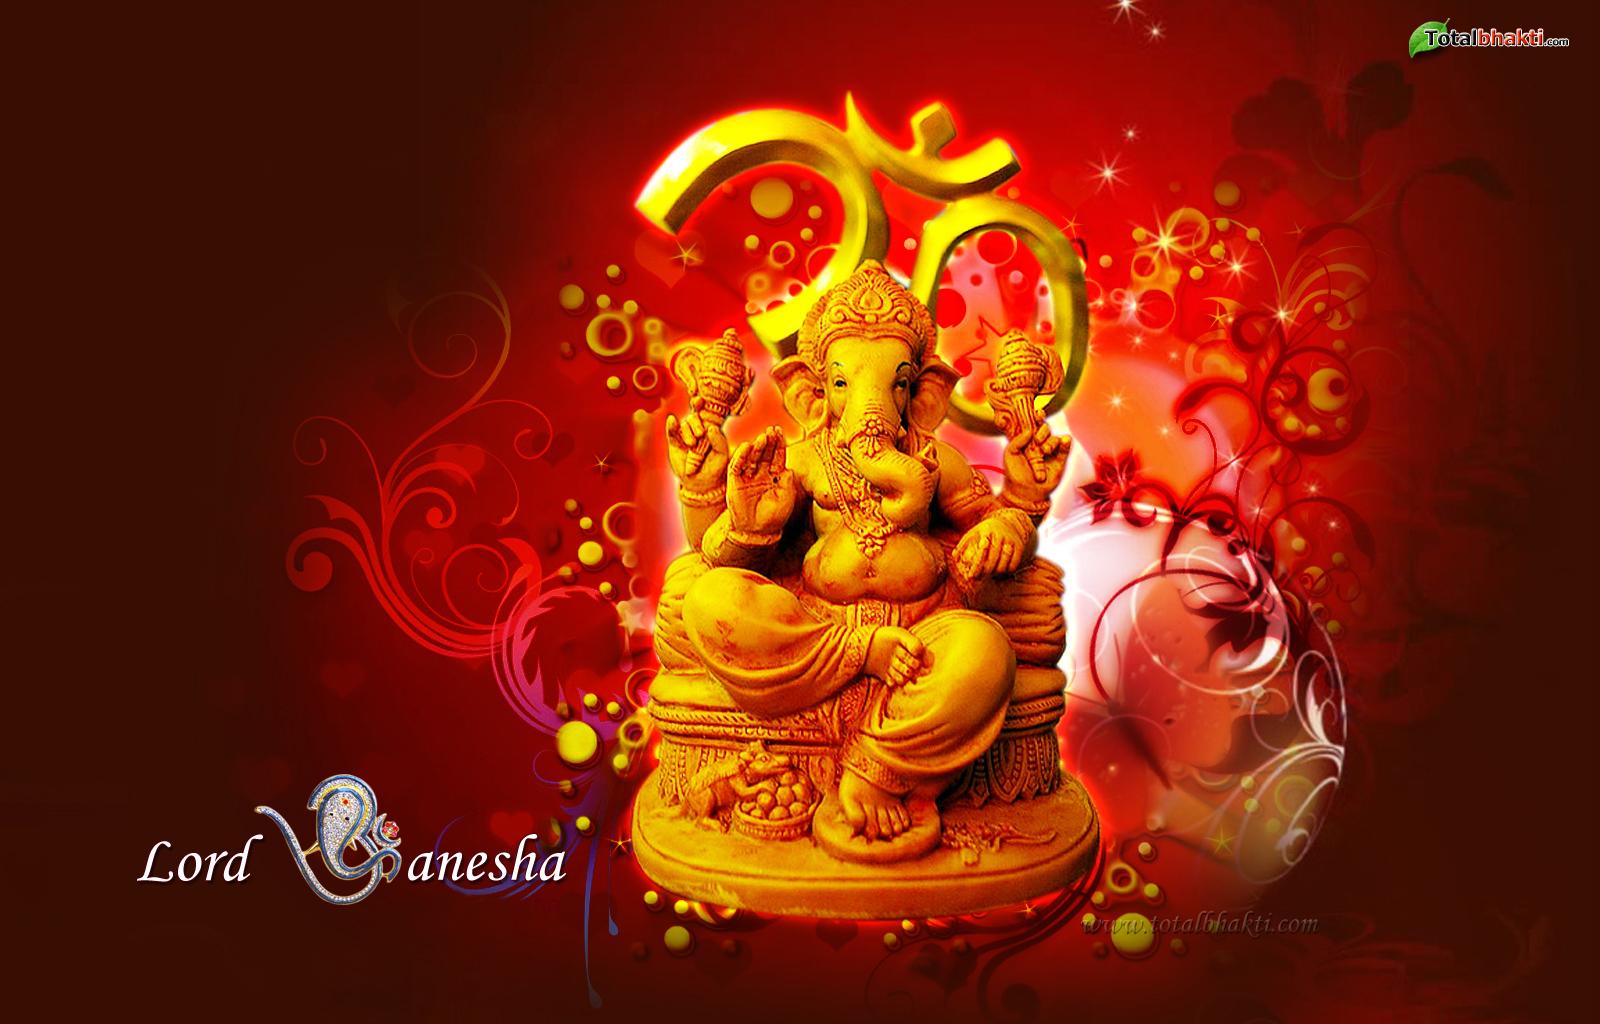 Lord Ganesha HD Wallpaper Image HD Lord Ganesha HD Wallpaper 1080p Wallpaper & Background Download